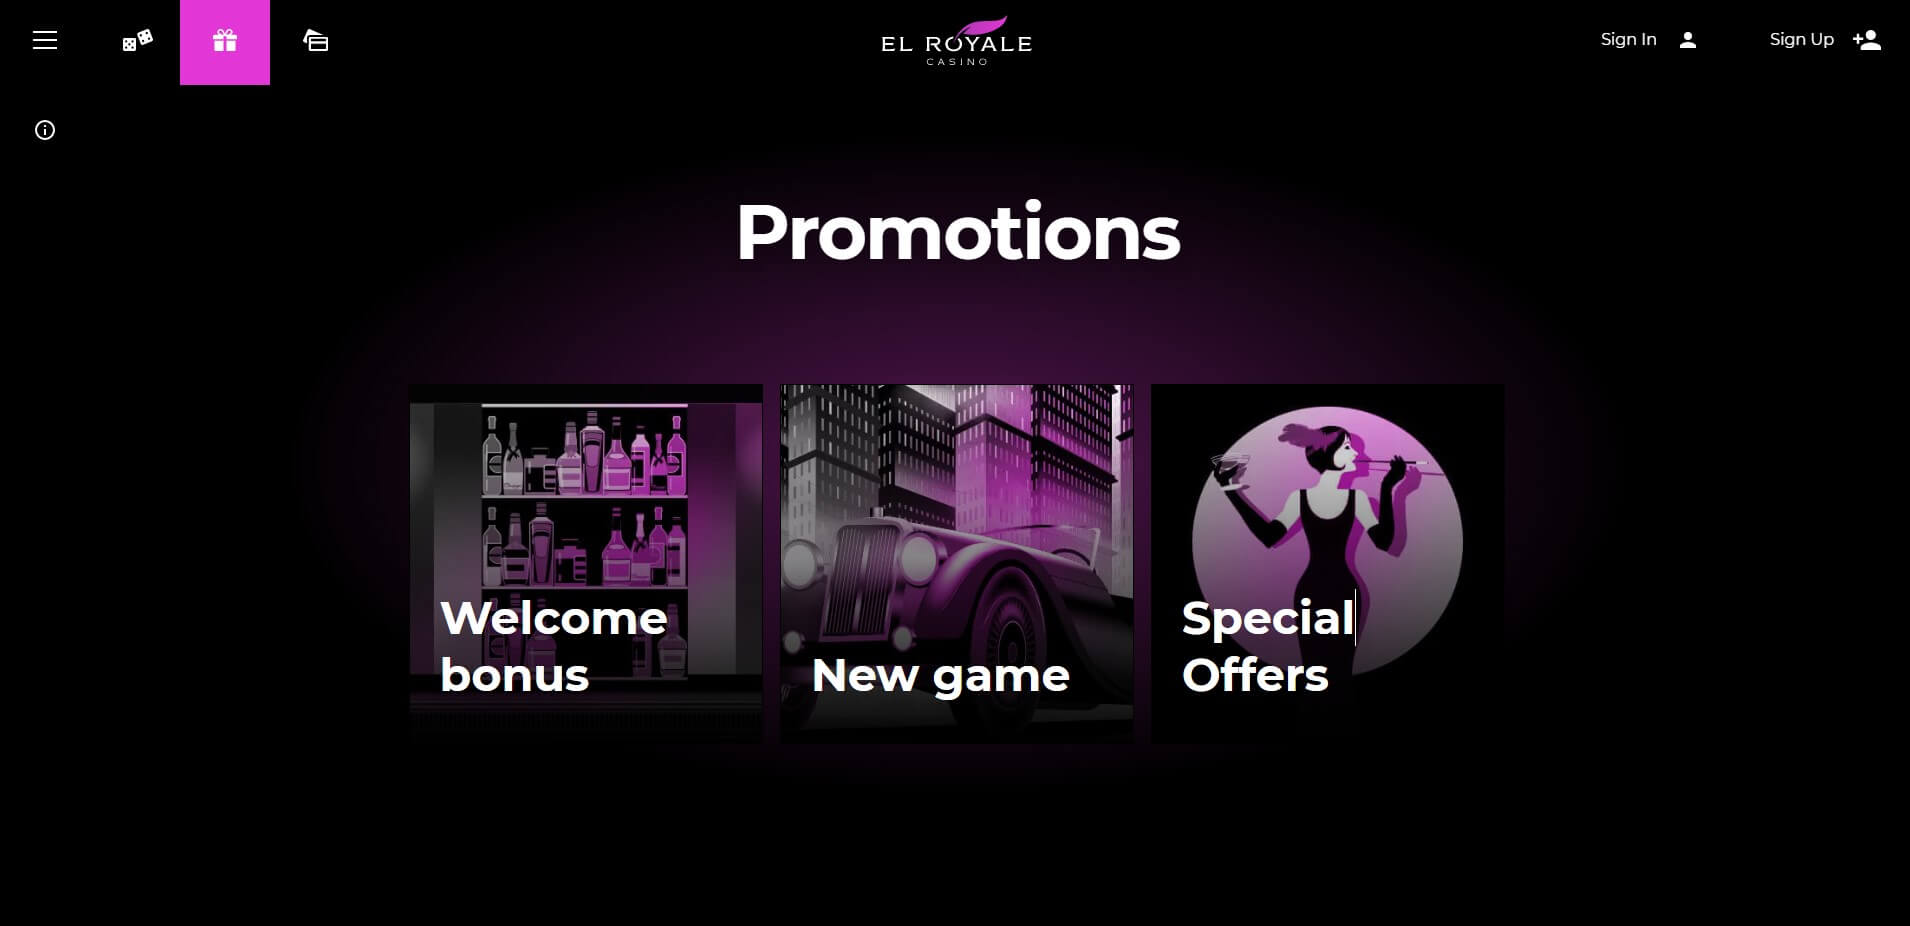 El Royale Casino Promotions